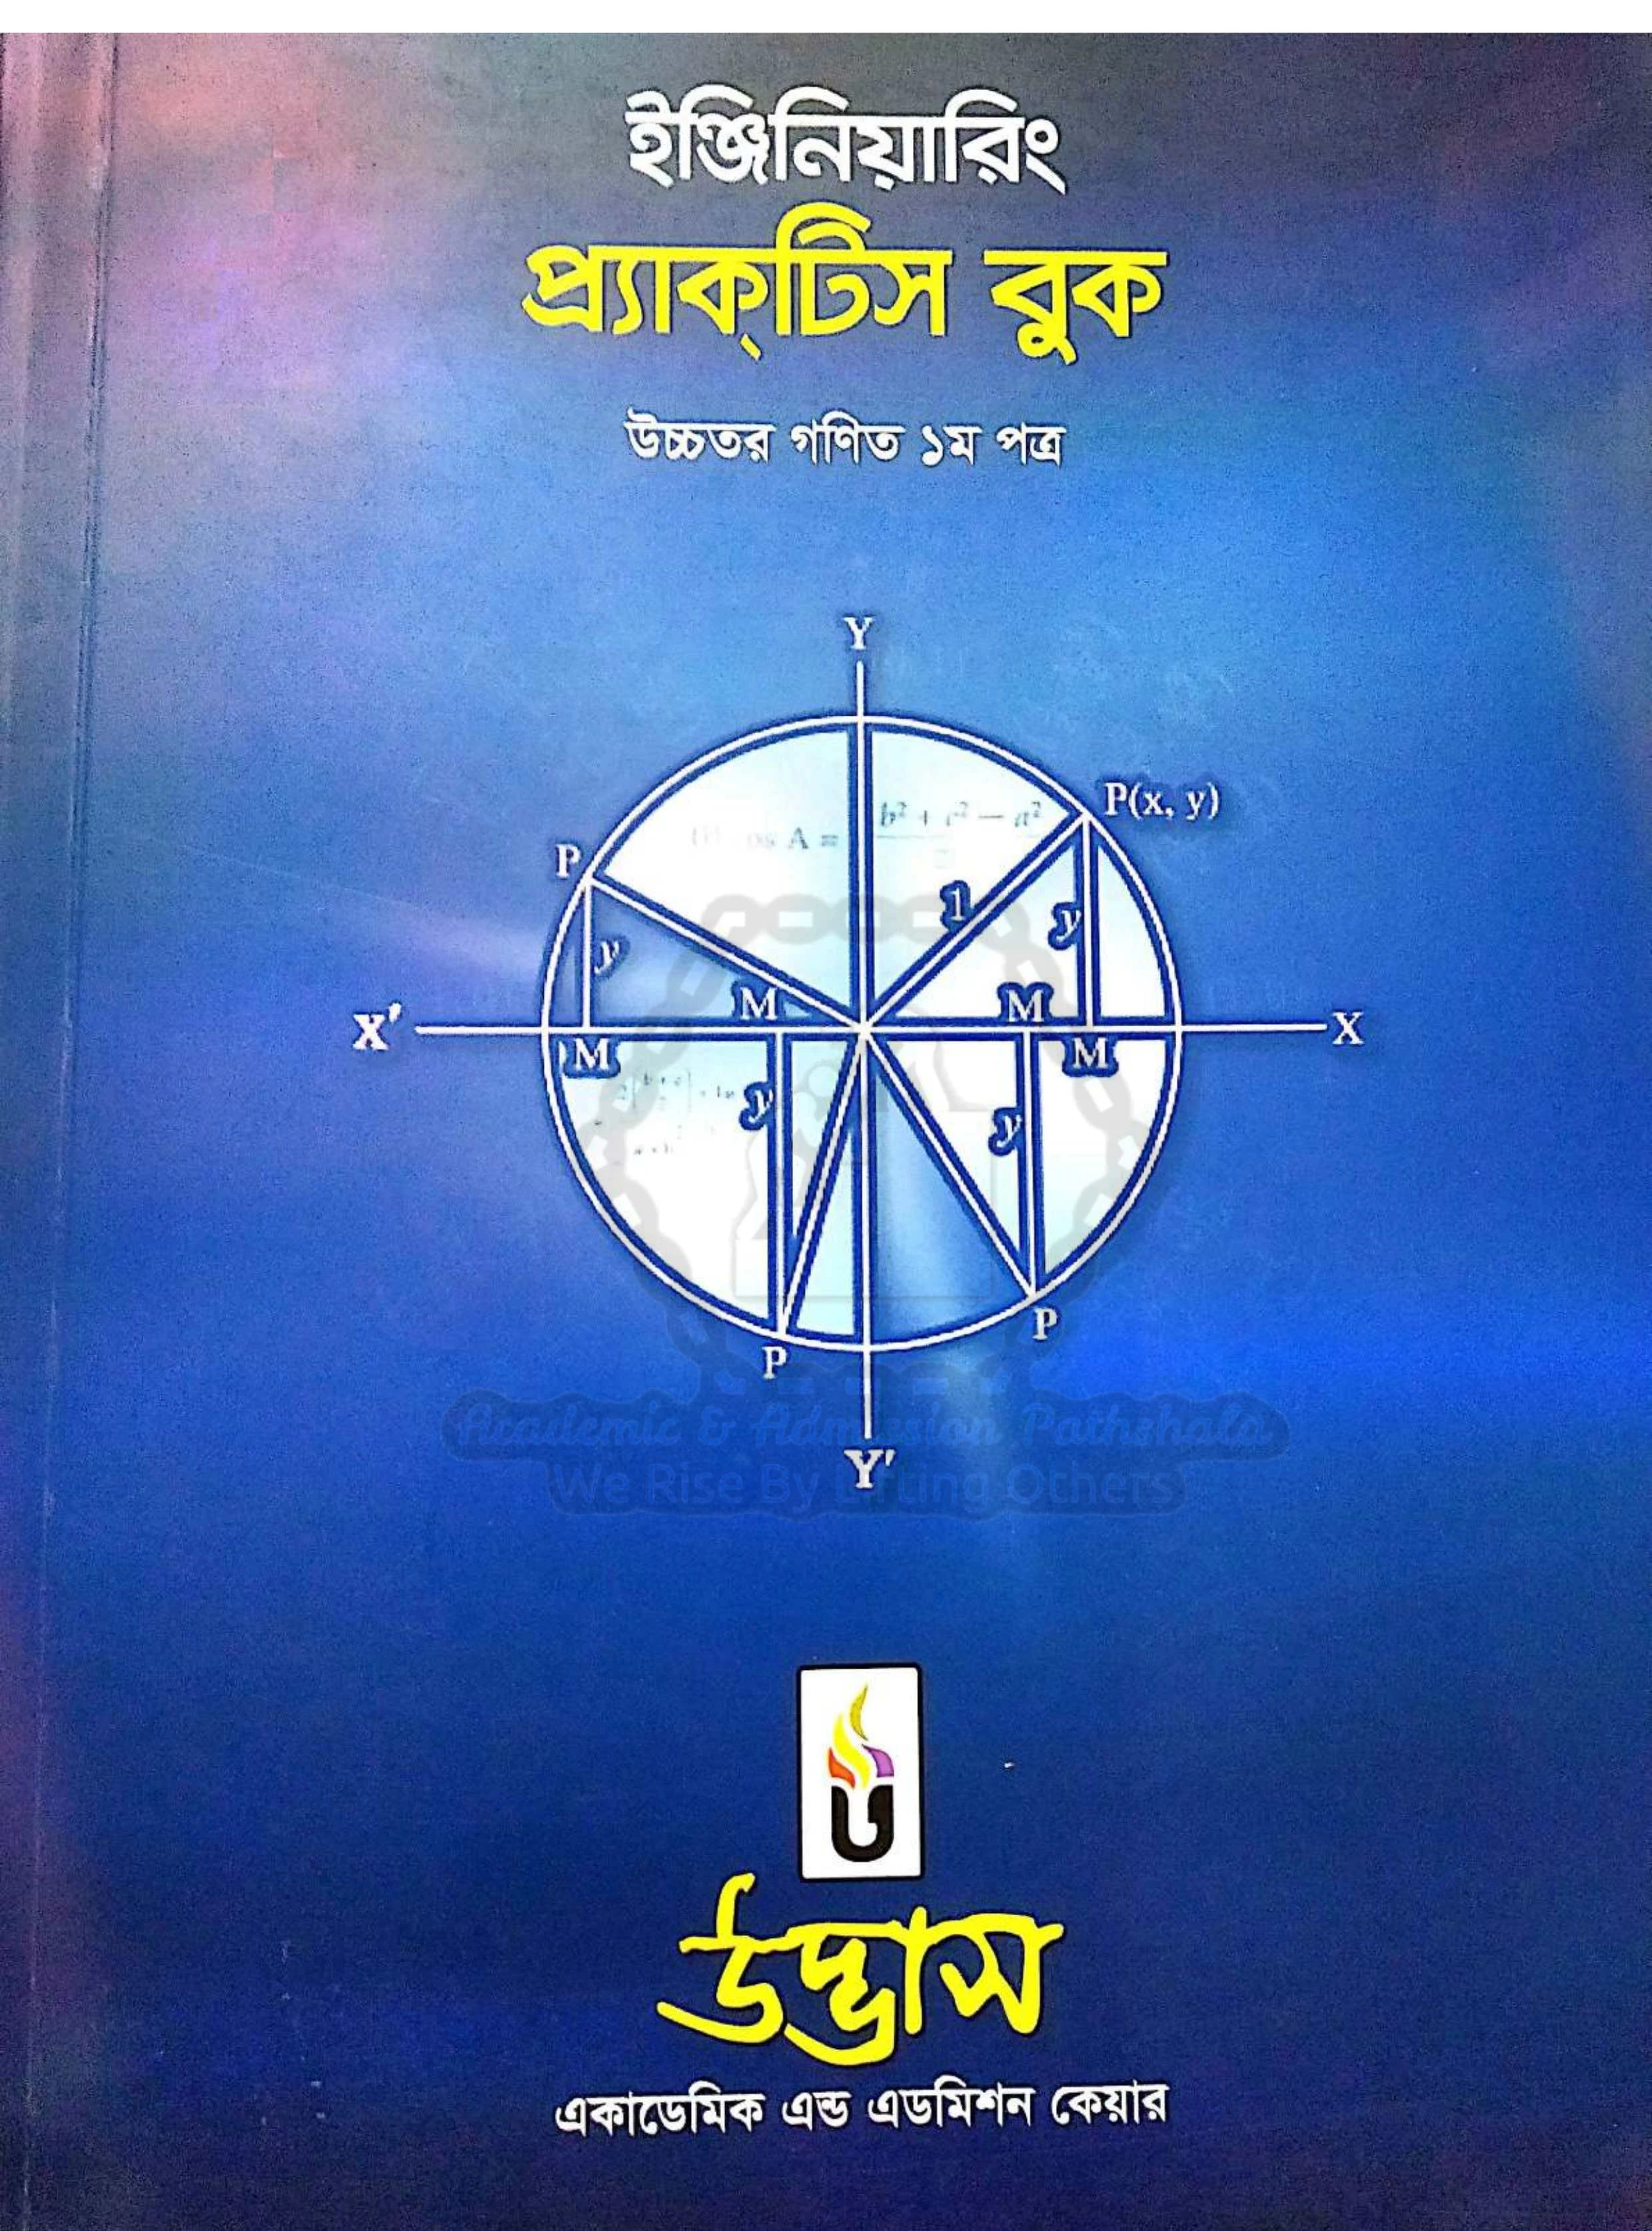 Udvash engineering Higher Math 1st Paper Practice Book Pdf | Udvash Higher Math 1st Paper practice book pdf | উদ্ভাস ইঞ্জিনিয়ারিং প্র্যাকটিস বুক PDF (উচ্চতর গণিত ১ম পত্র)